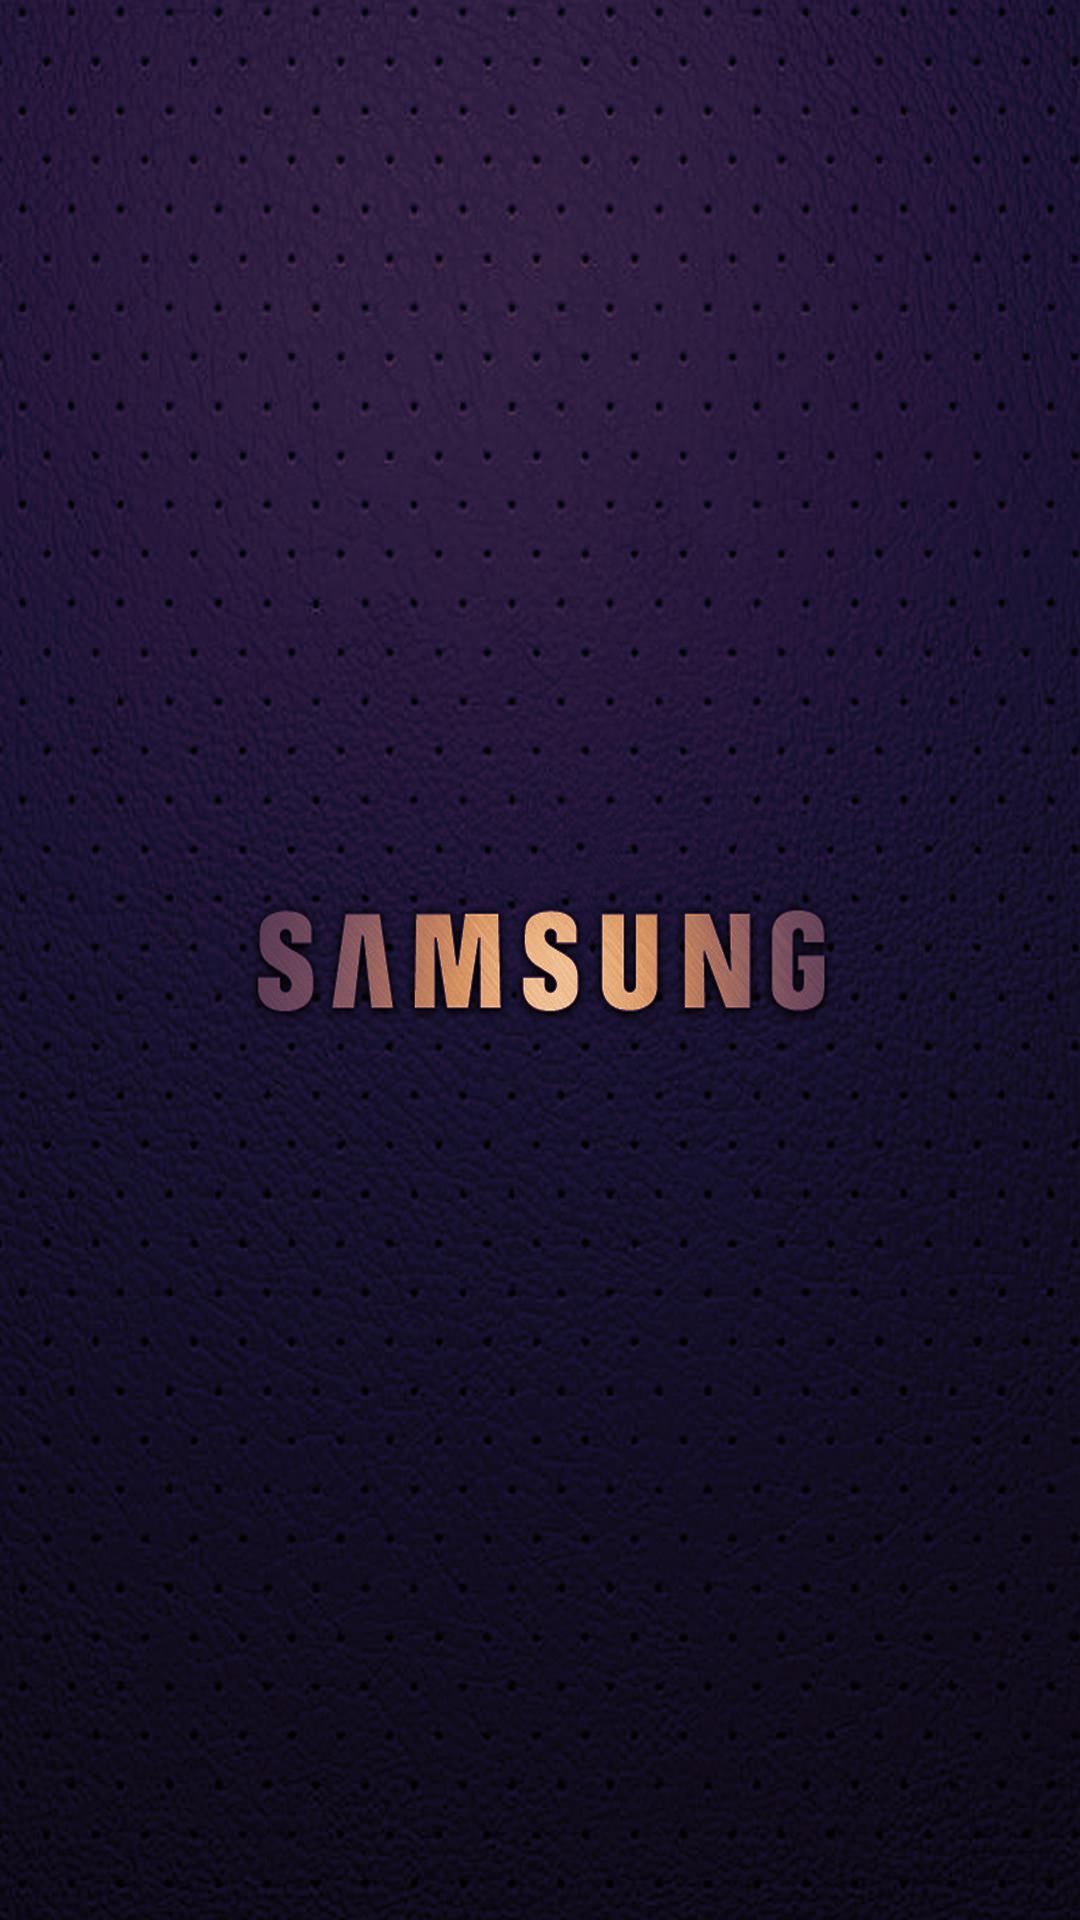 SAMSUNG logo wallpapersc SmartPhone